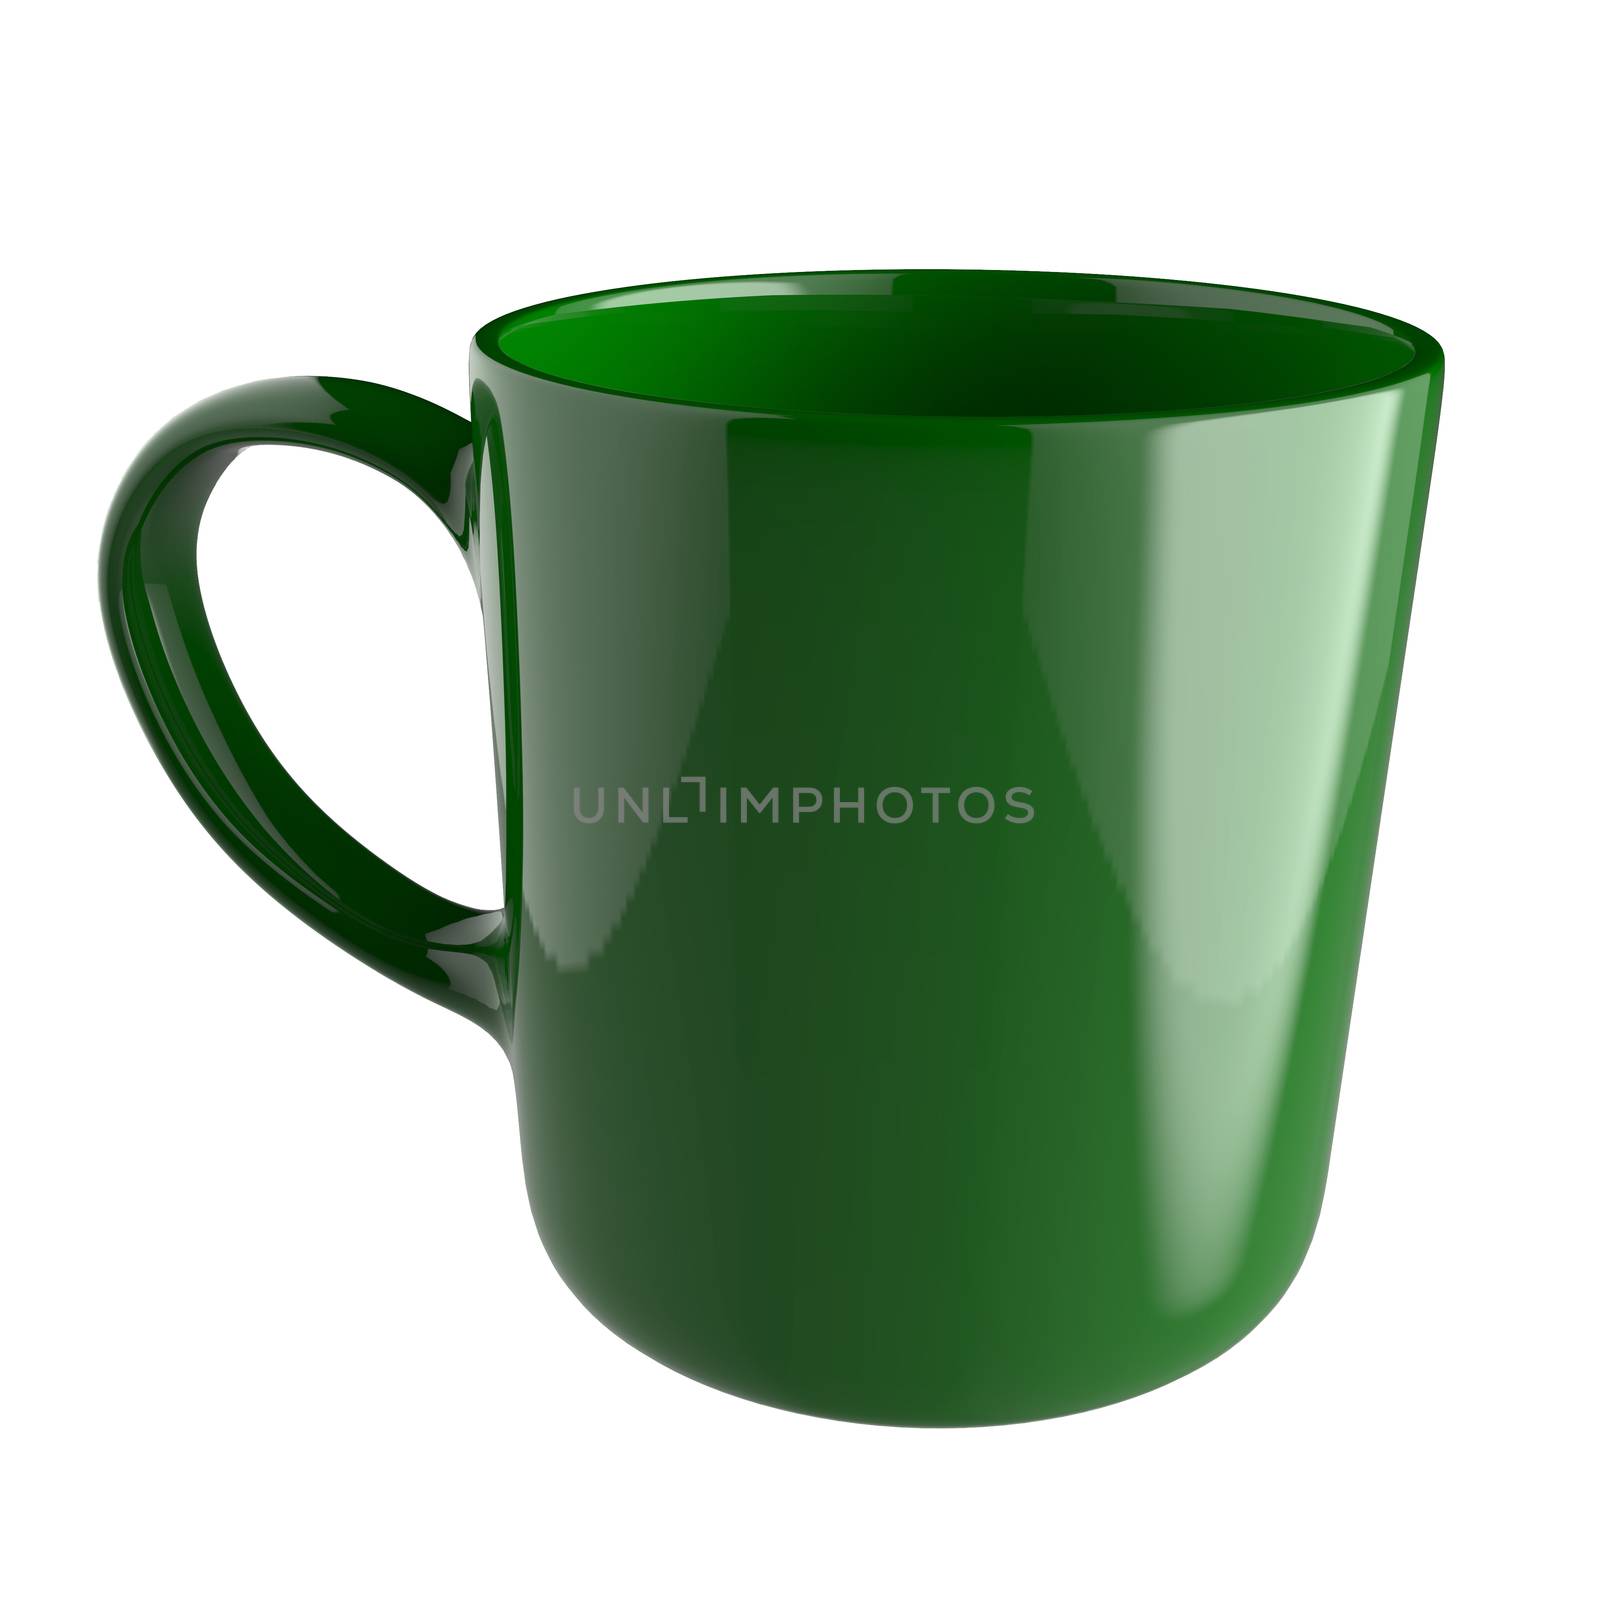 Coffee mug by everythingpossible